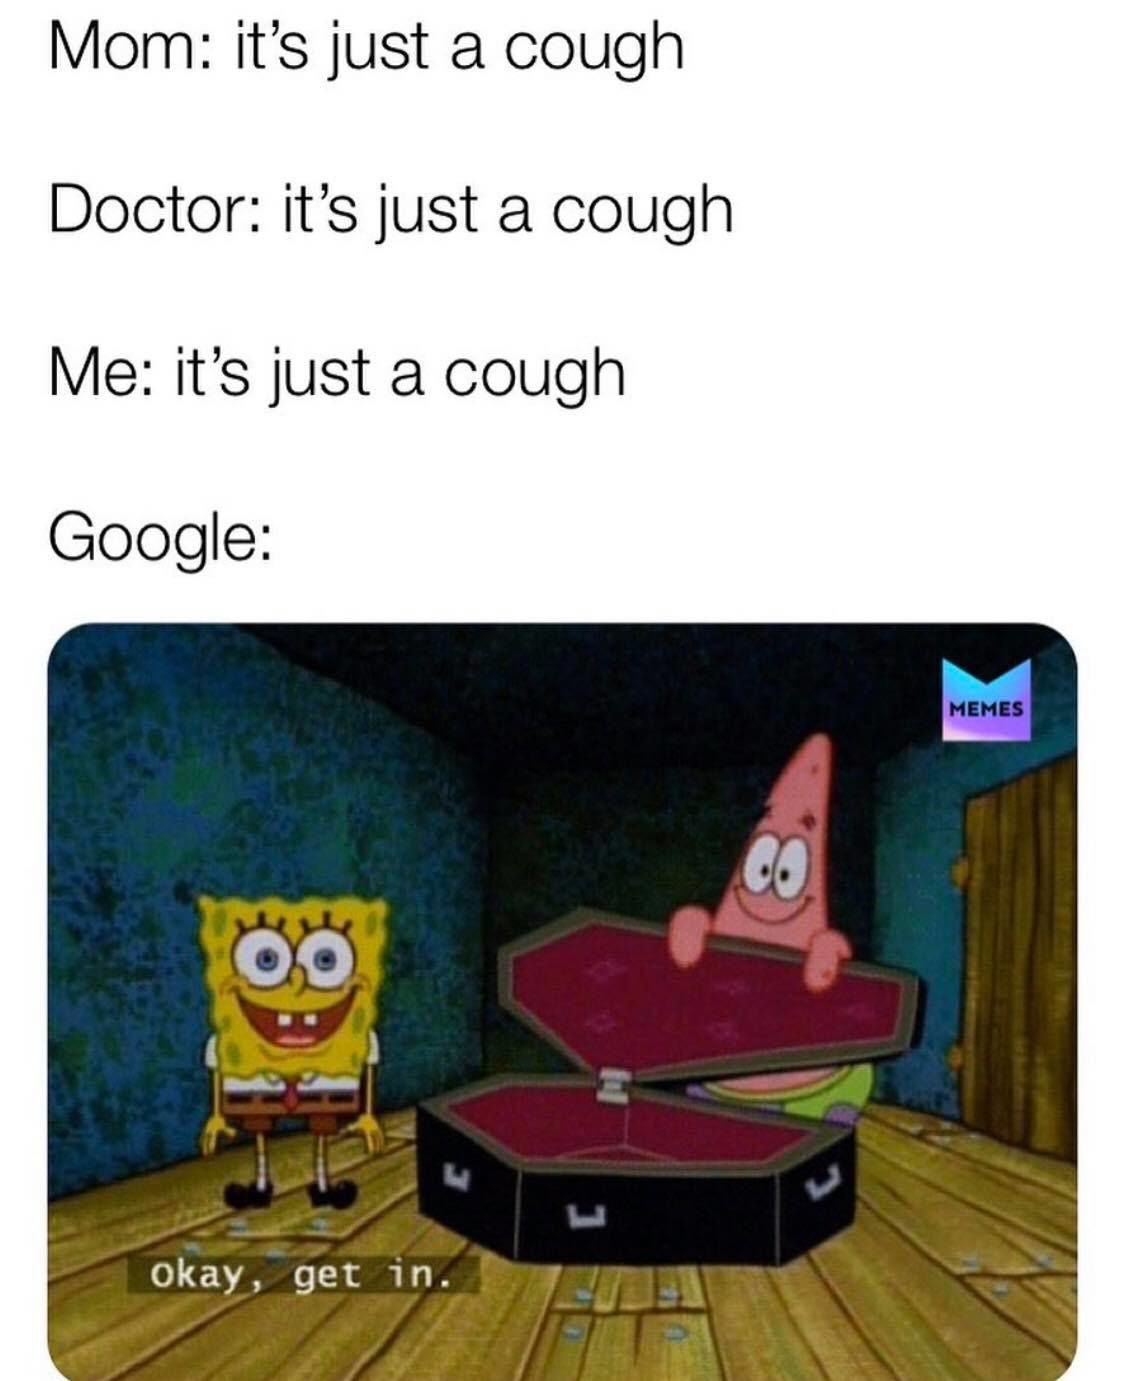 Just a cough sweetie! - meme